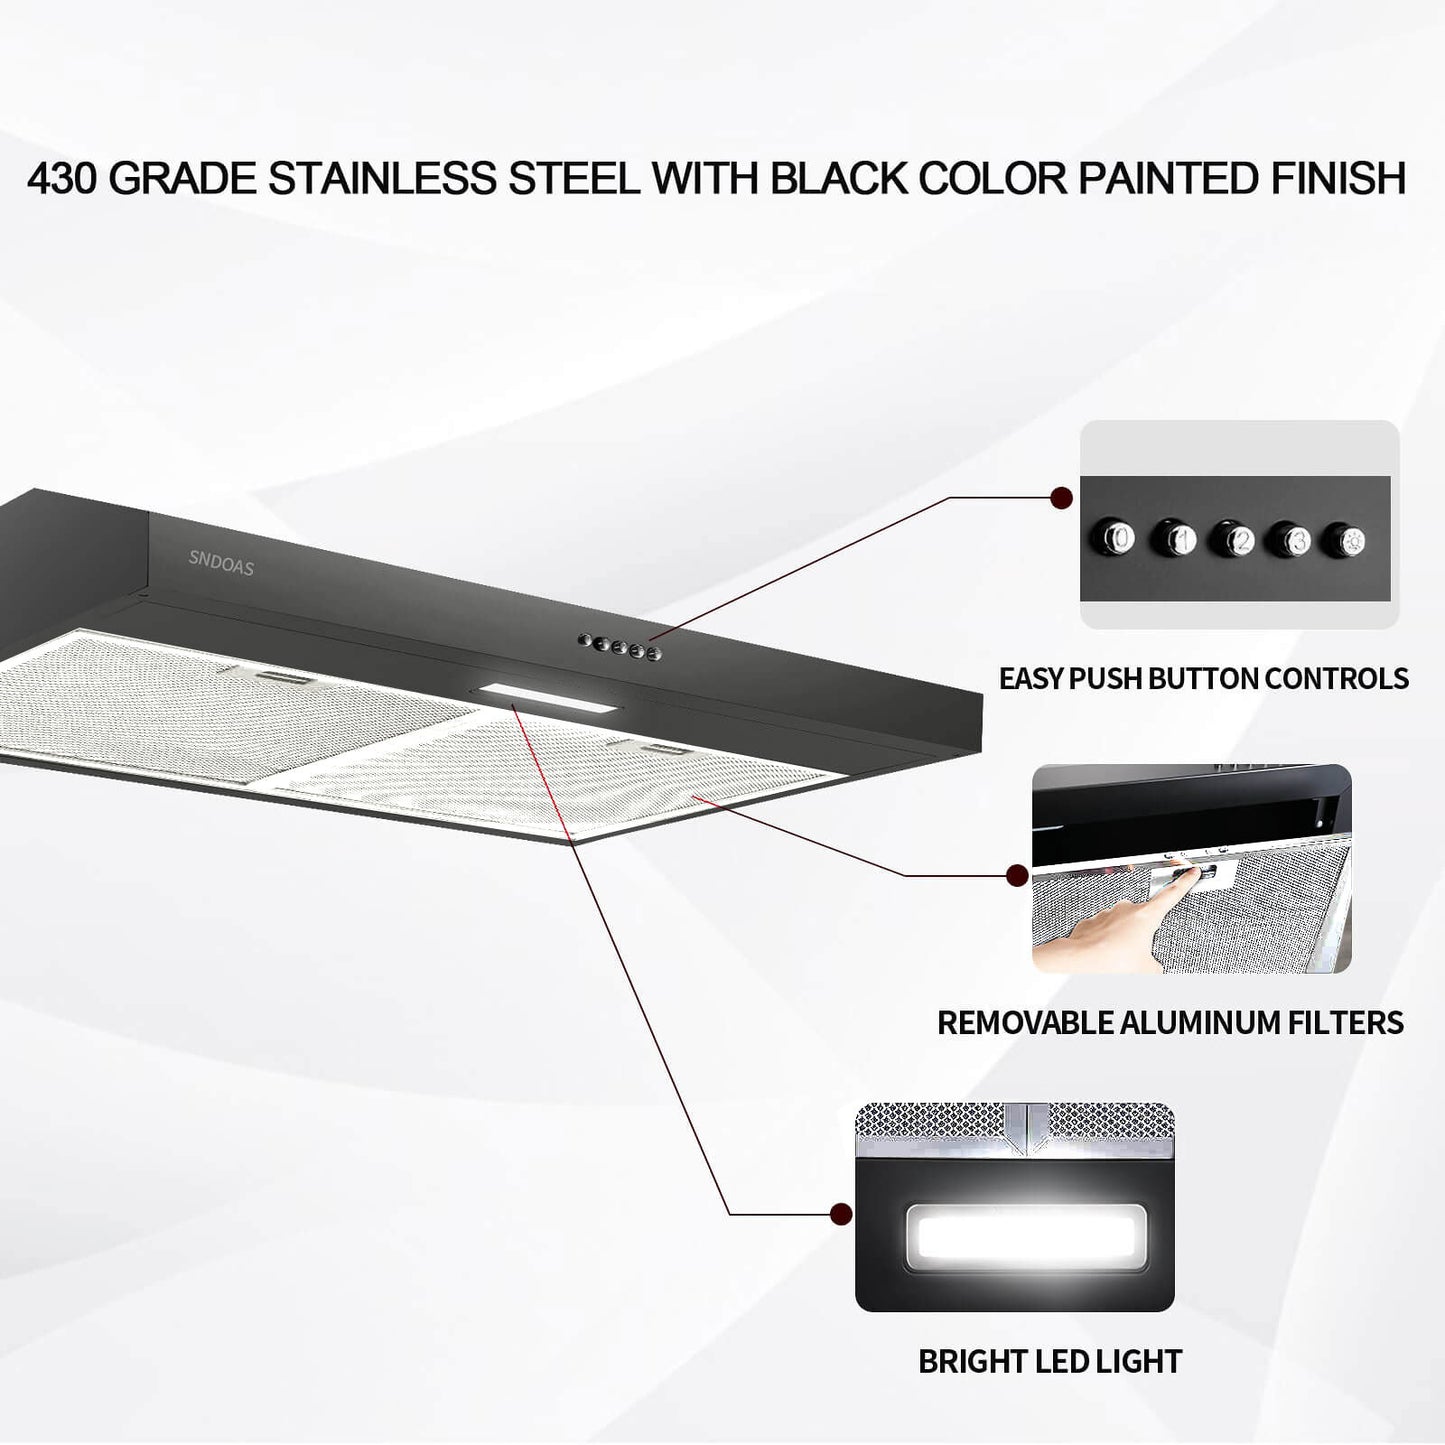 Stainless Steel Under Cabinet Range Hood Vent Cooking 230 CFM Kitchen 3 Speed cooker hood